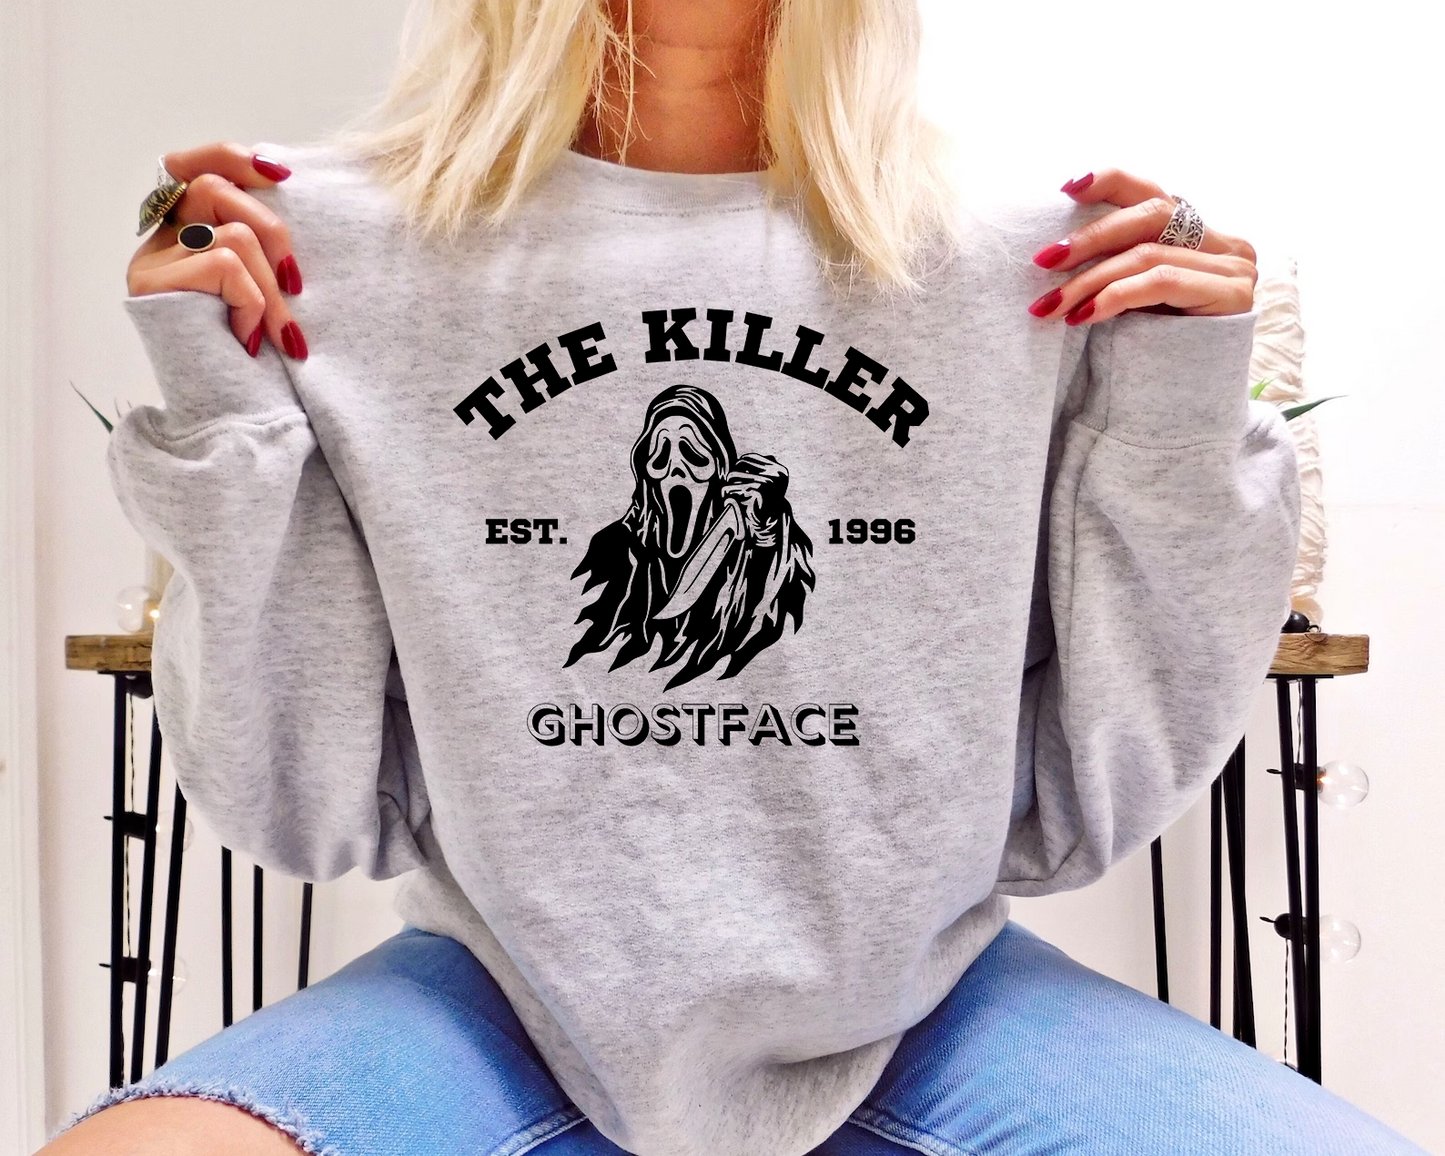 The Killer Ghost face etc. 1996 Shirt